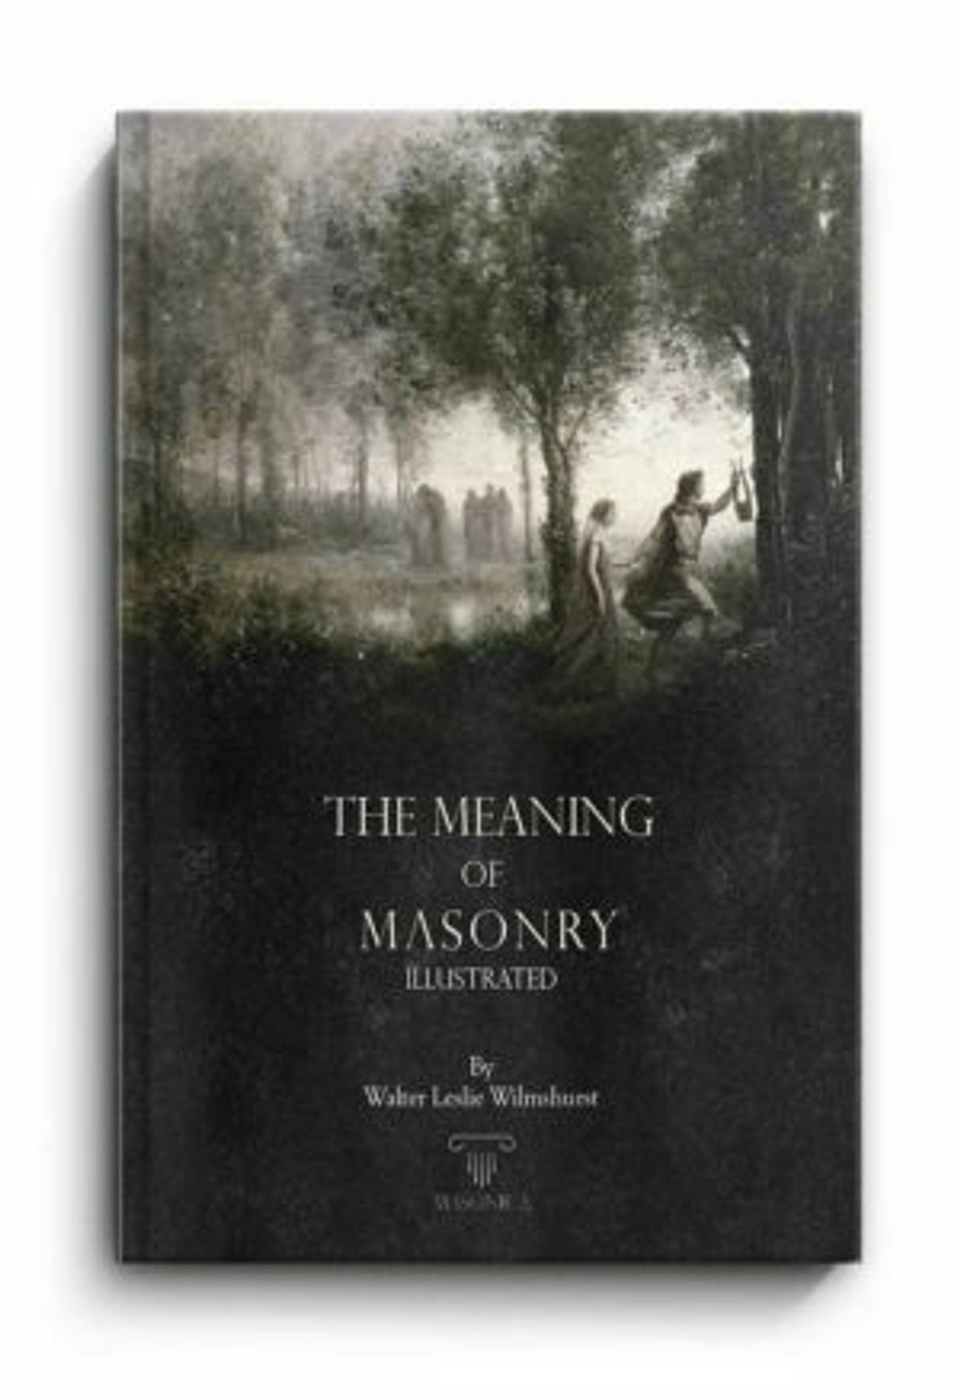 Walter Leslie Wilmshurst’s first book on Freemasonry, The Meaning of Freemasonry